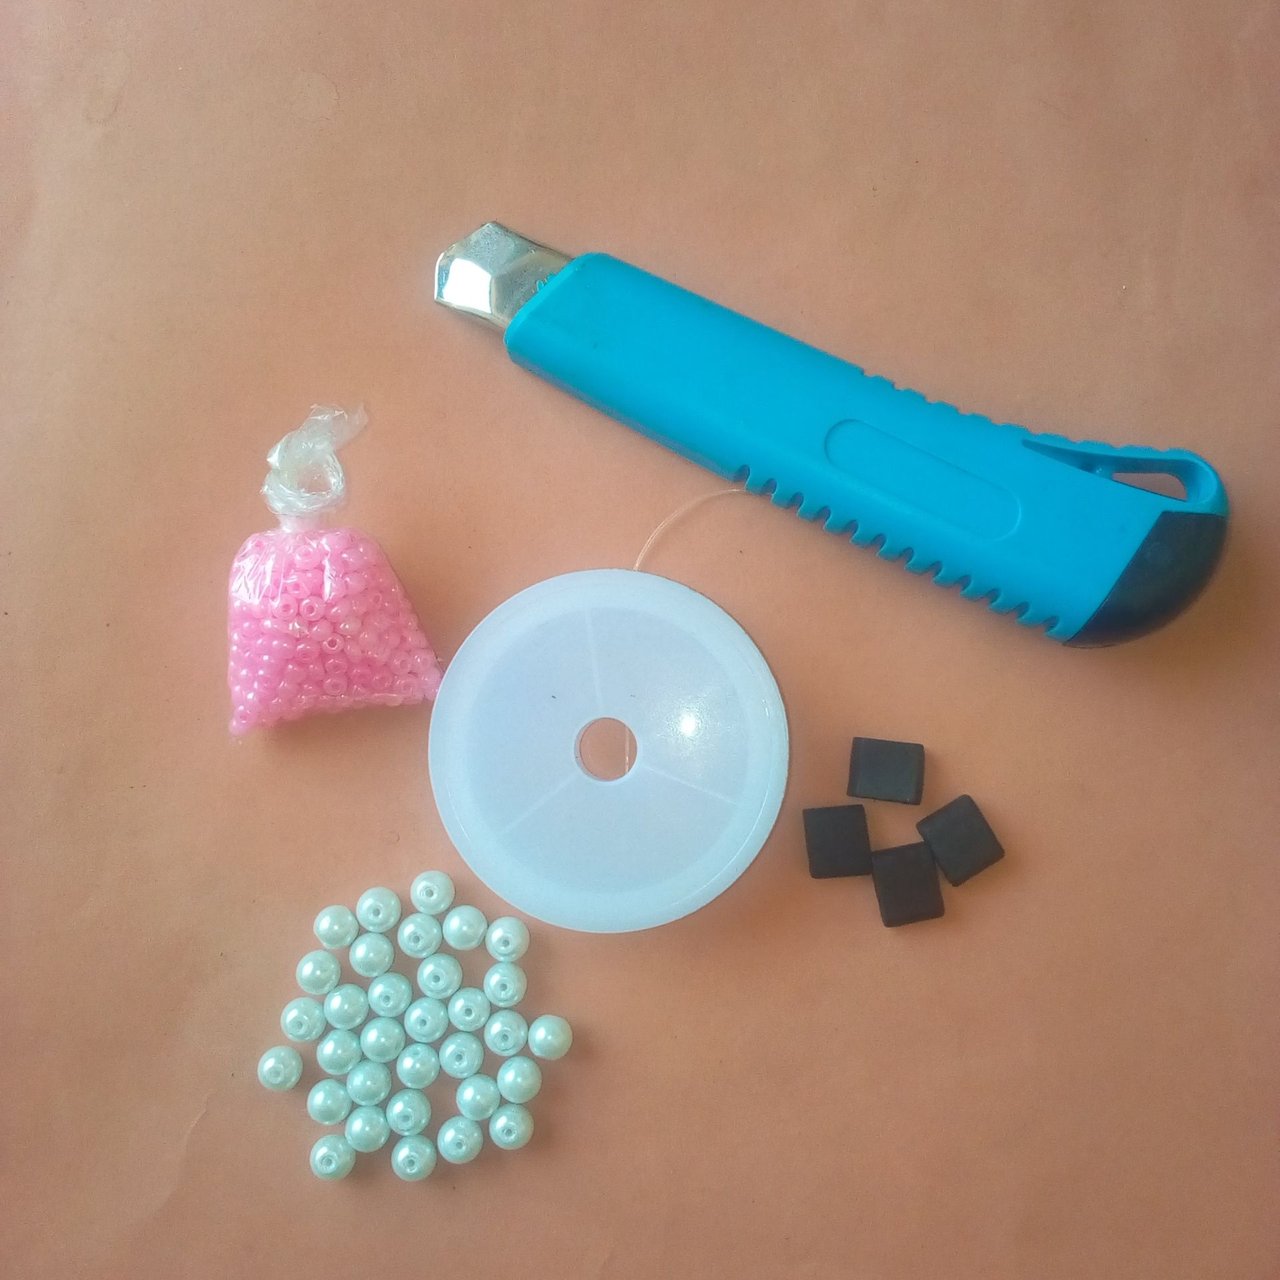 File:Plastic beads1.jpg - Wikimedia Commons